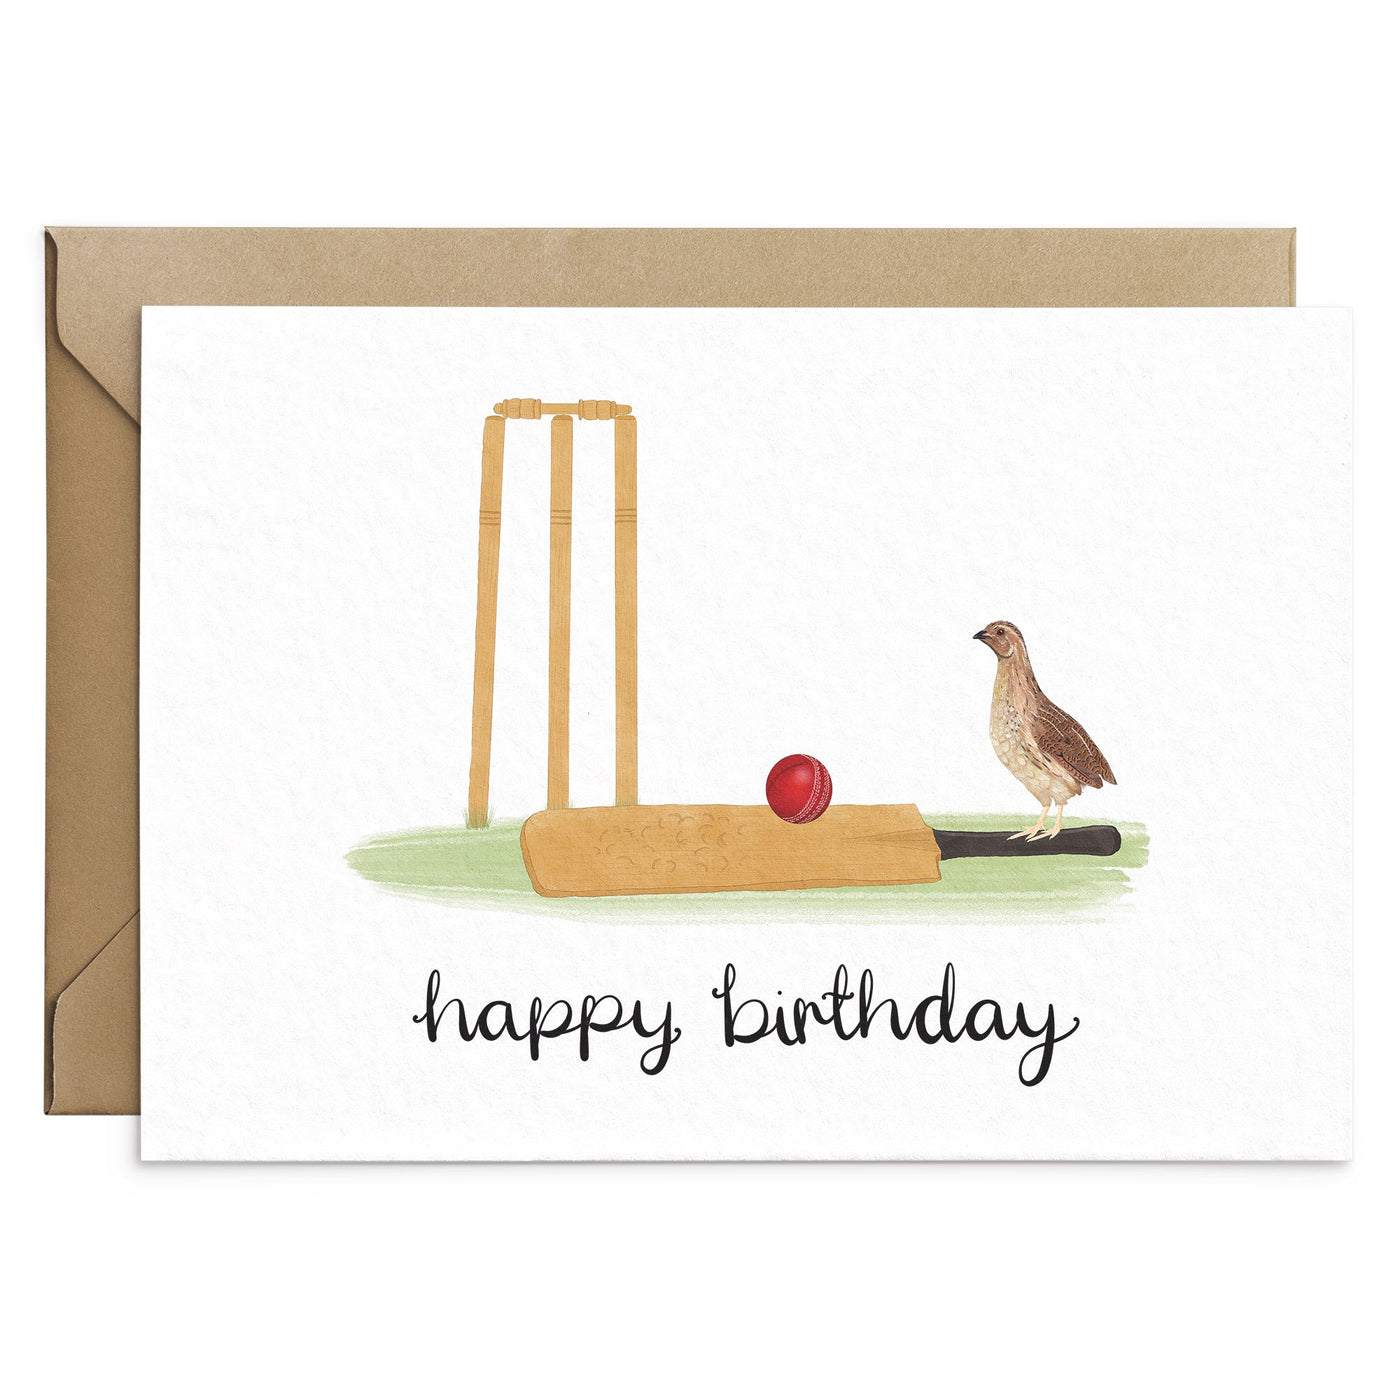 Funny Quail Birthday Card - Poppins & Co.